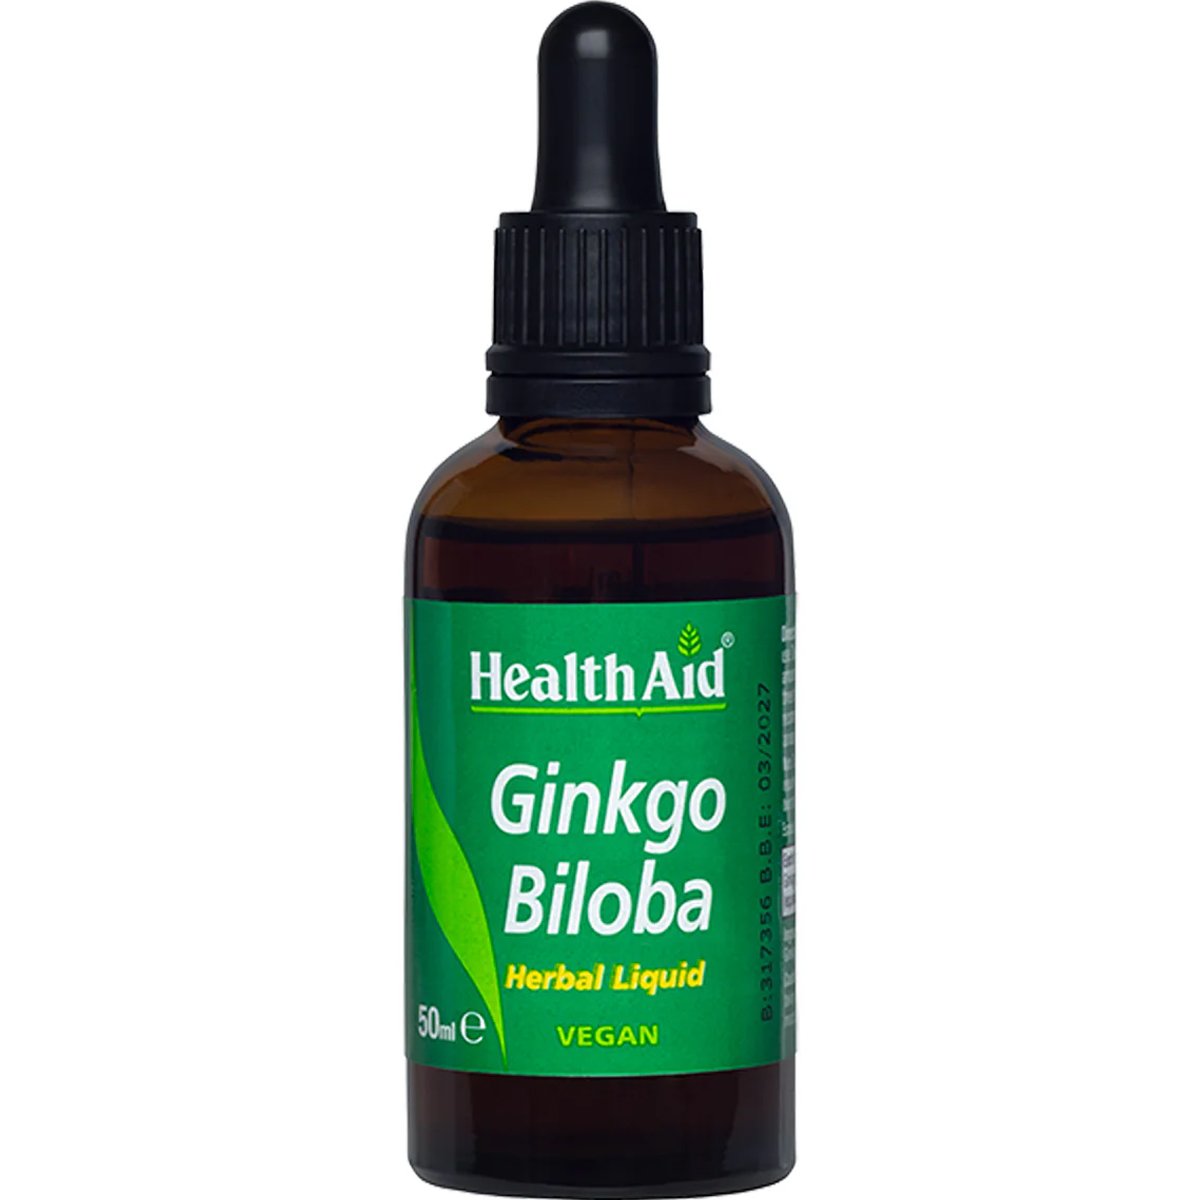 Health Aid Ginkgo Biloba Herbal Liquid Συμπλήρωμα Διατροφής Εκχυλίσματος του Βοτάνου Ginkgo Biloba για Ενίσχυση της Μνήμης & Καλή Λειτουργία του Κυκλοφορικού Συστήματος σε Πόσιμο Υγρό 50ml